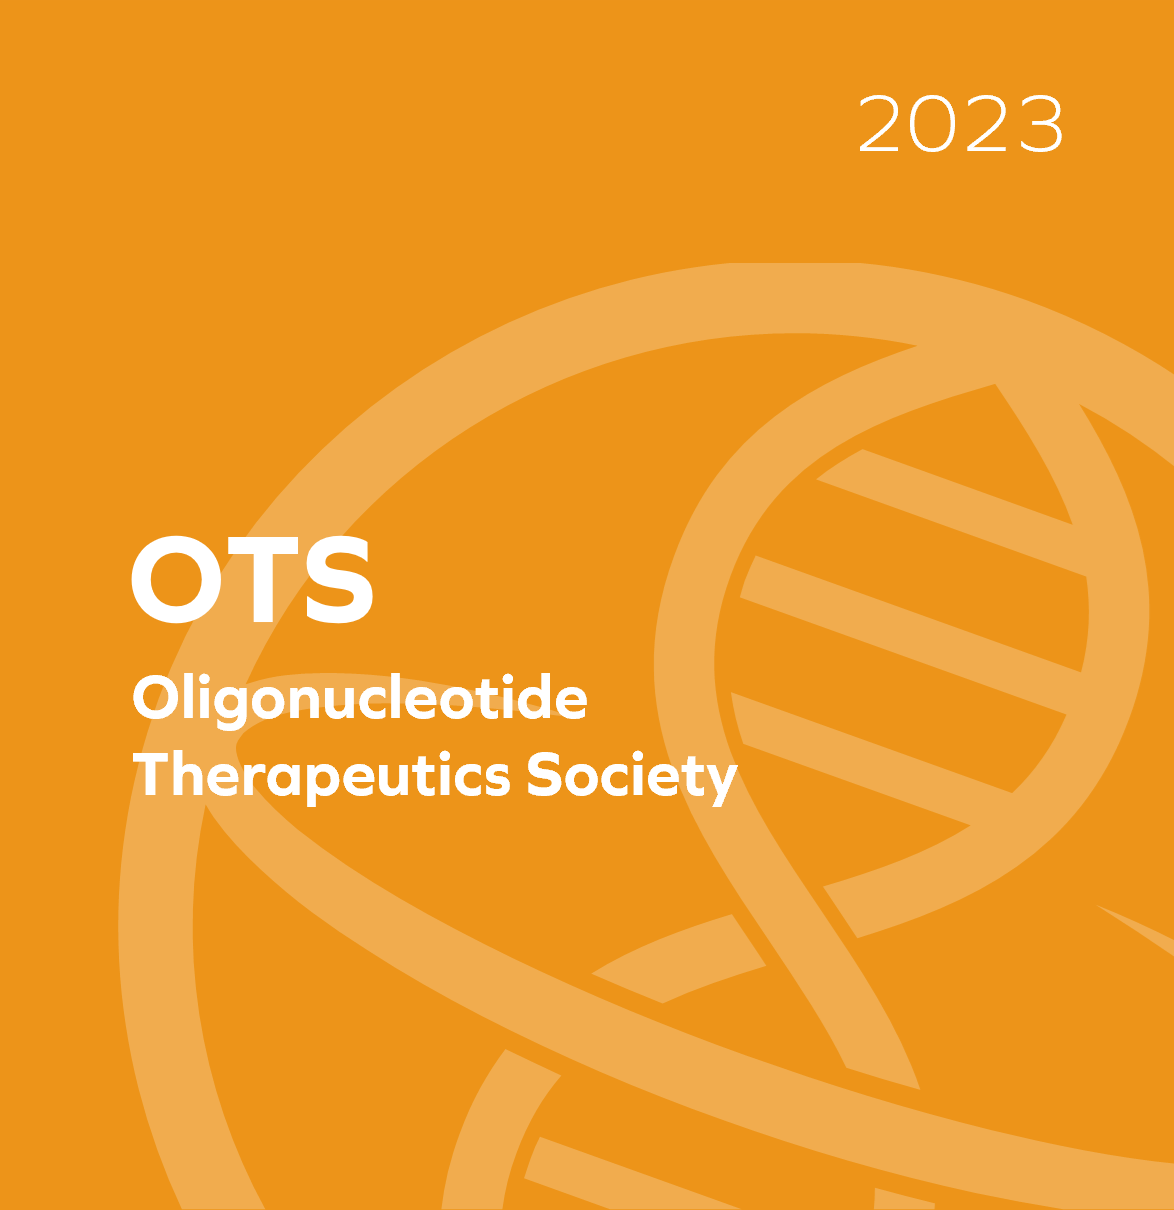 OTS: Annual Meeting of the Oligonucleotide Therapeutics Society